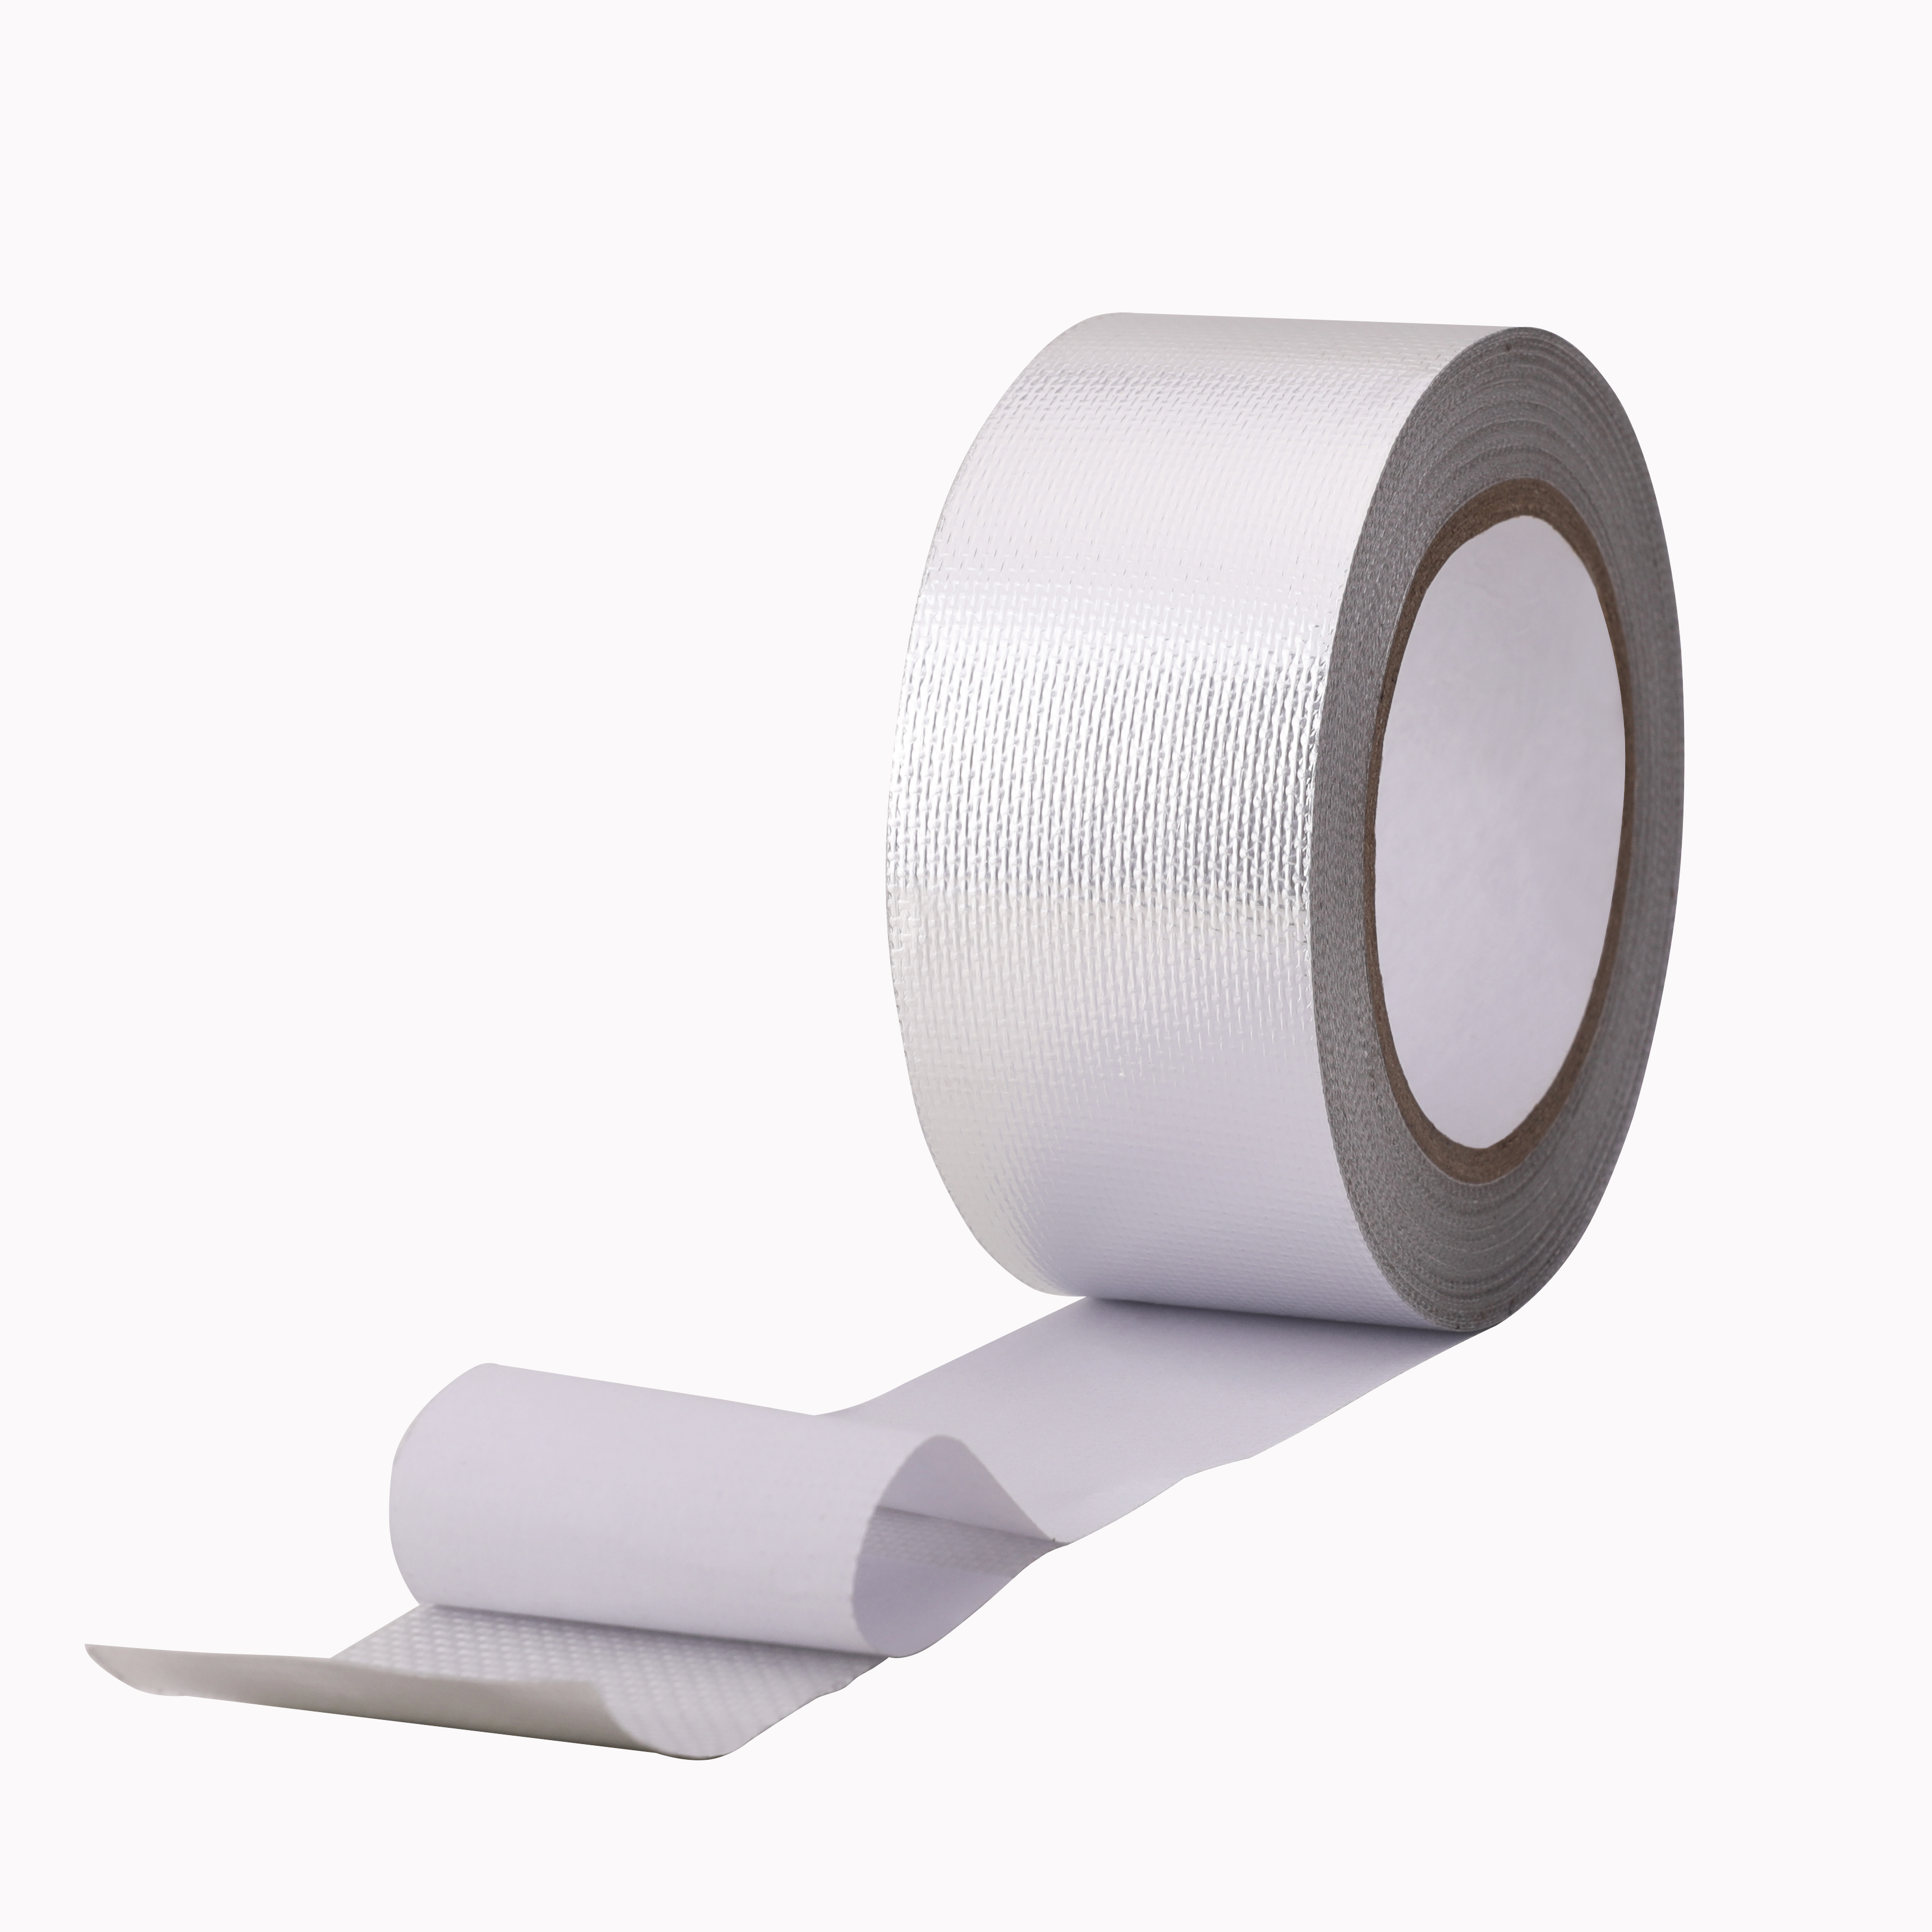 Applications of aluminum foil tape